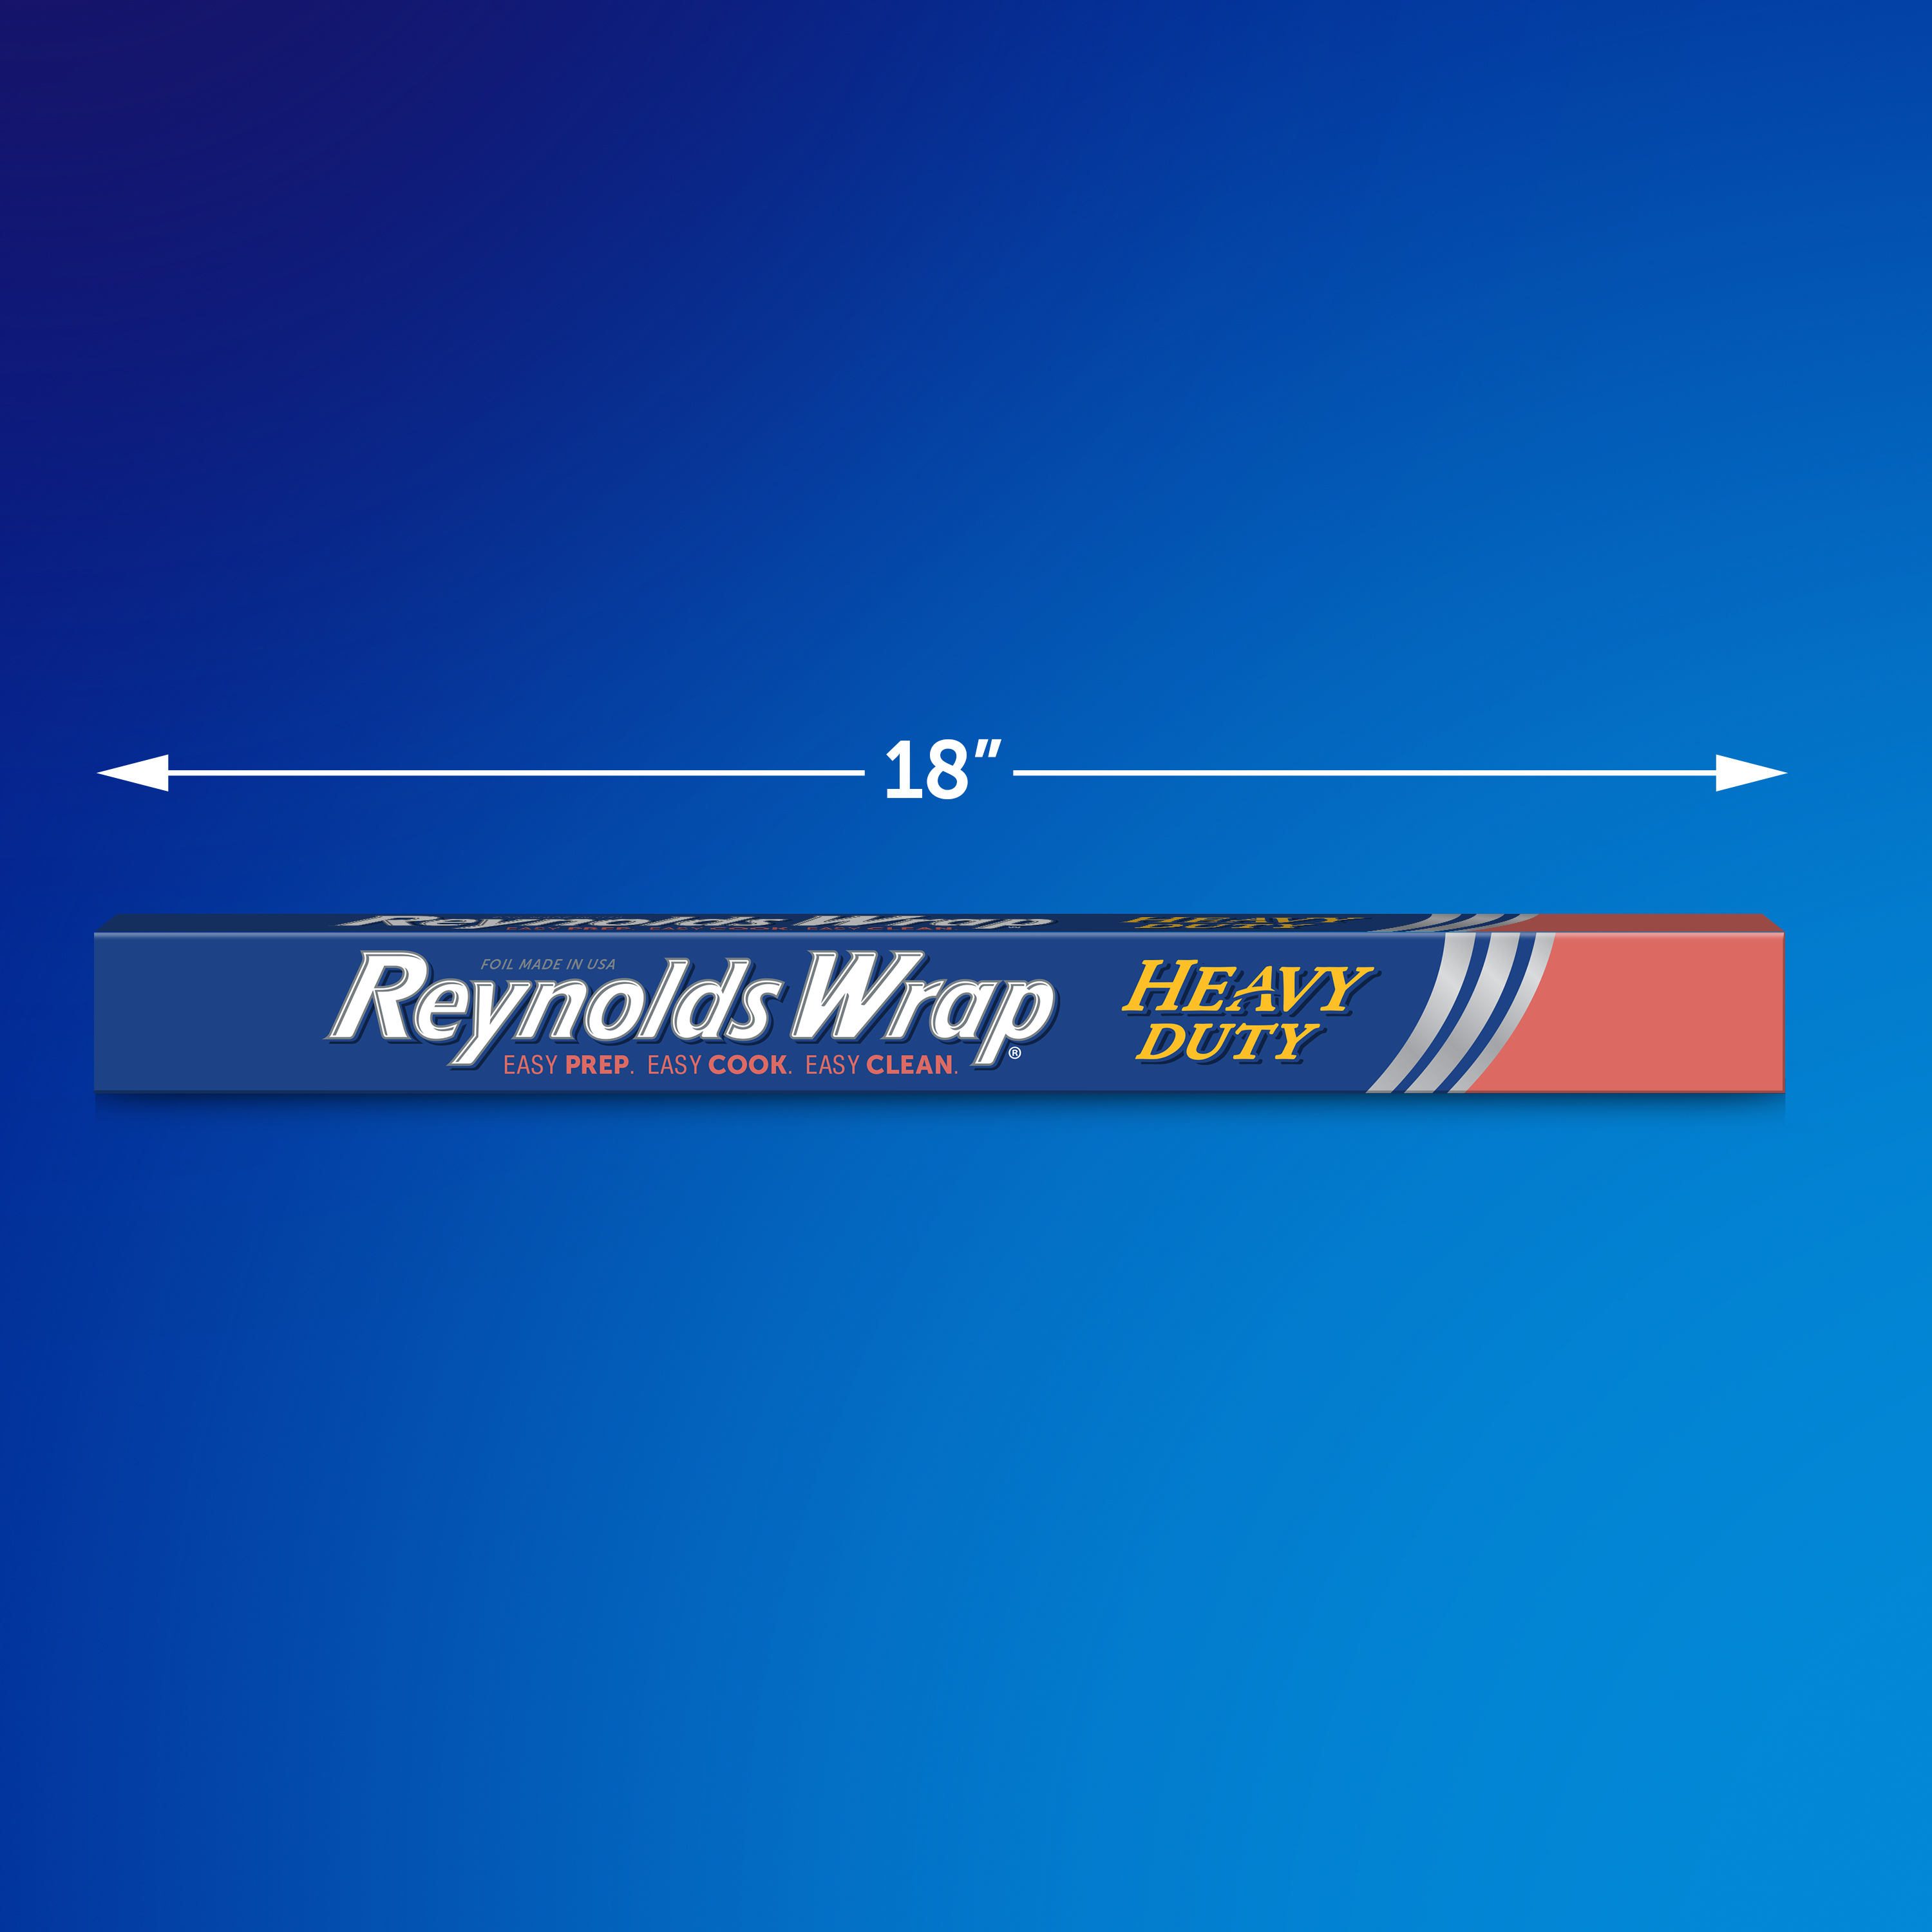 Reynolds Wrap Aluminum Foil, Heavy Duty, 18 inch, 75 Square Feet - image 3 of 8